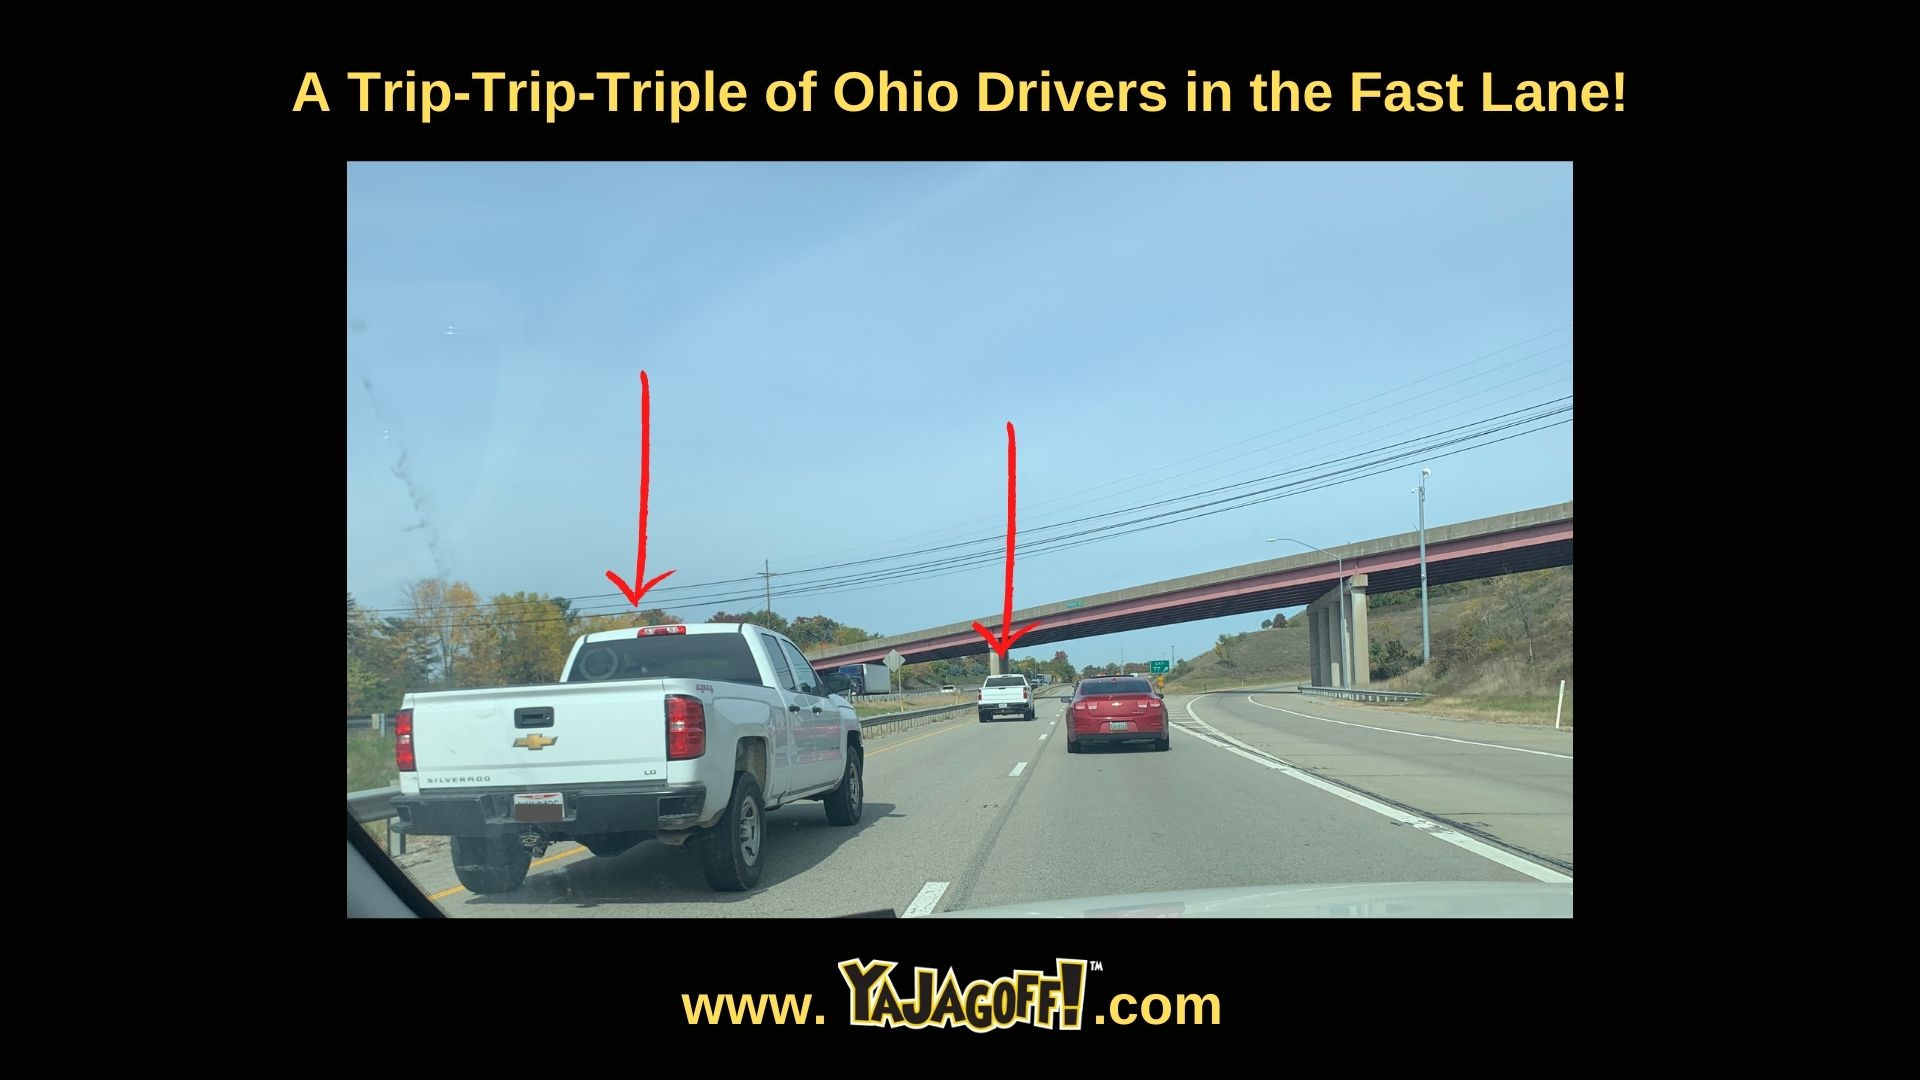 'YaJagoff Jagoffs Ohio Drivers